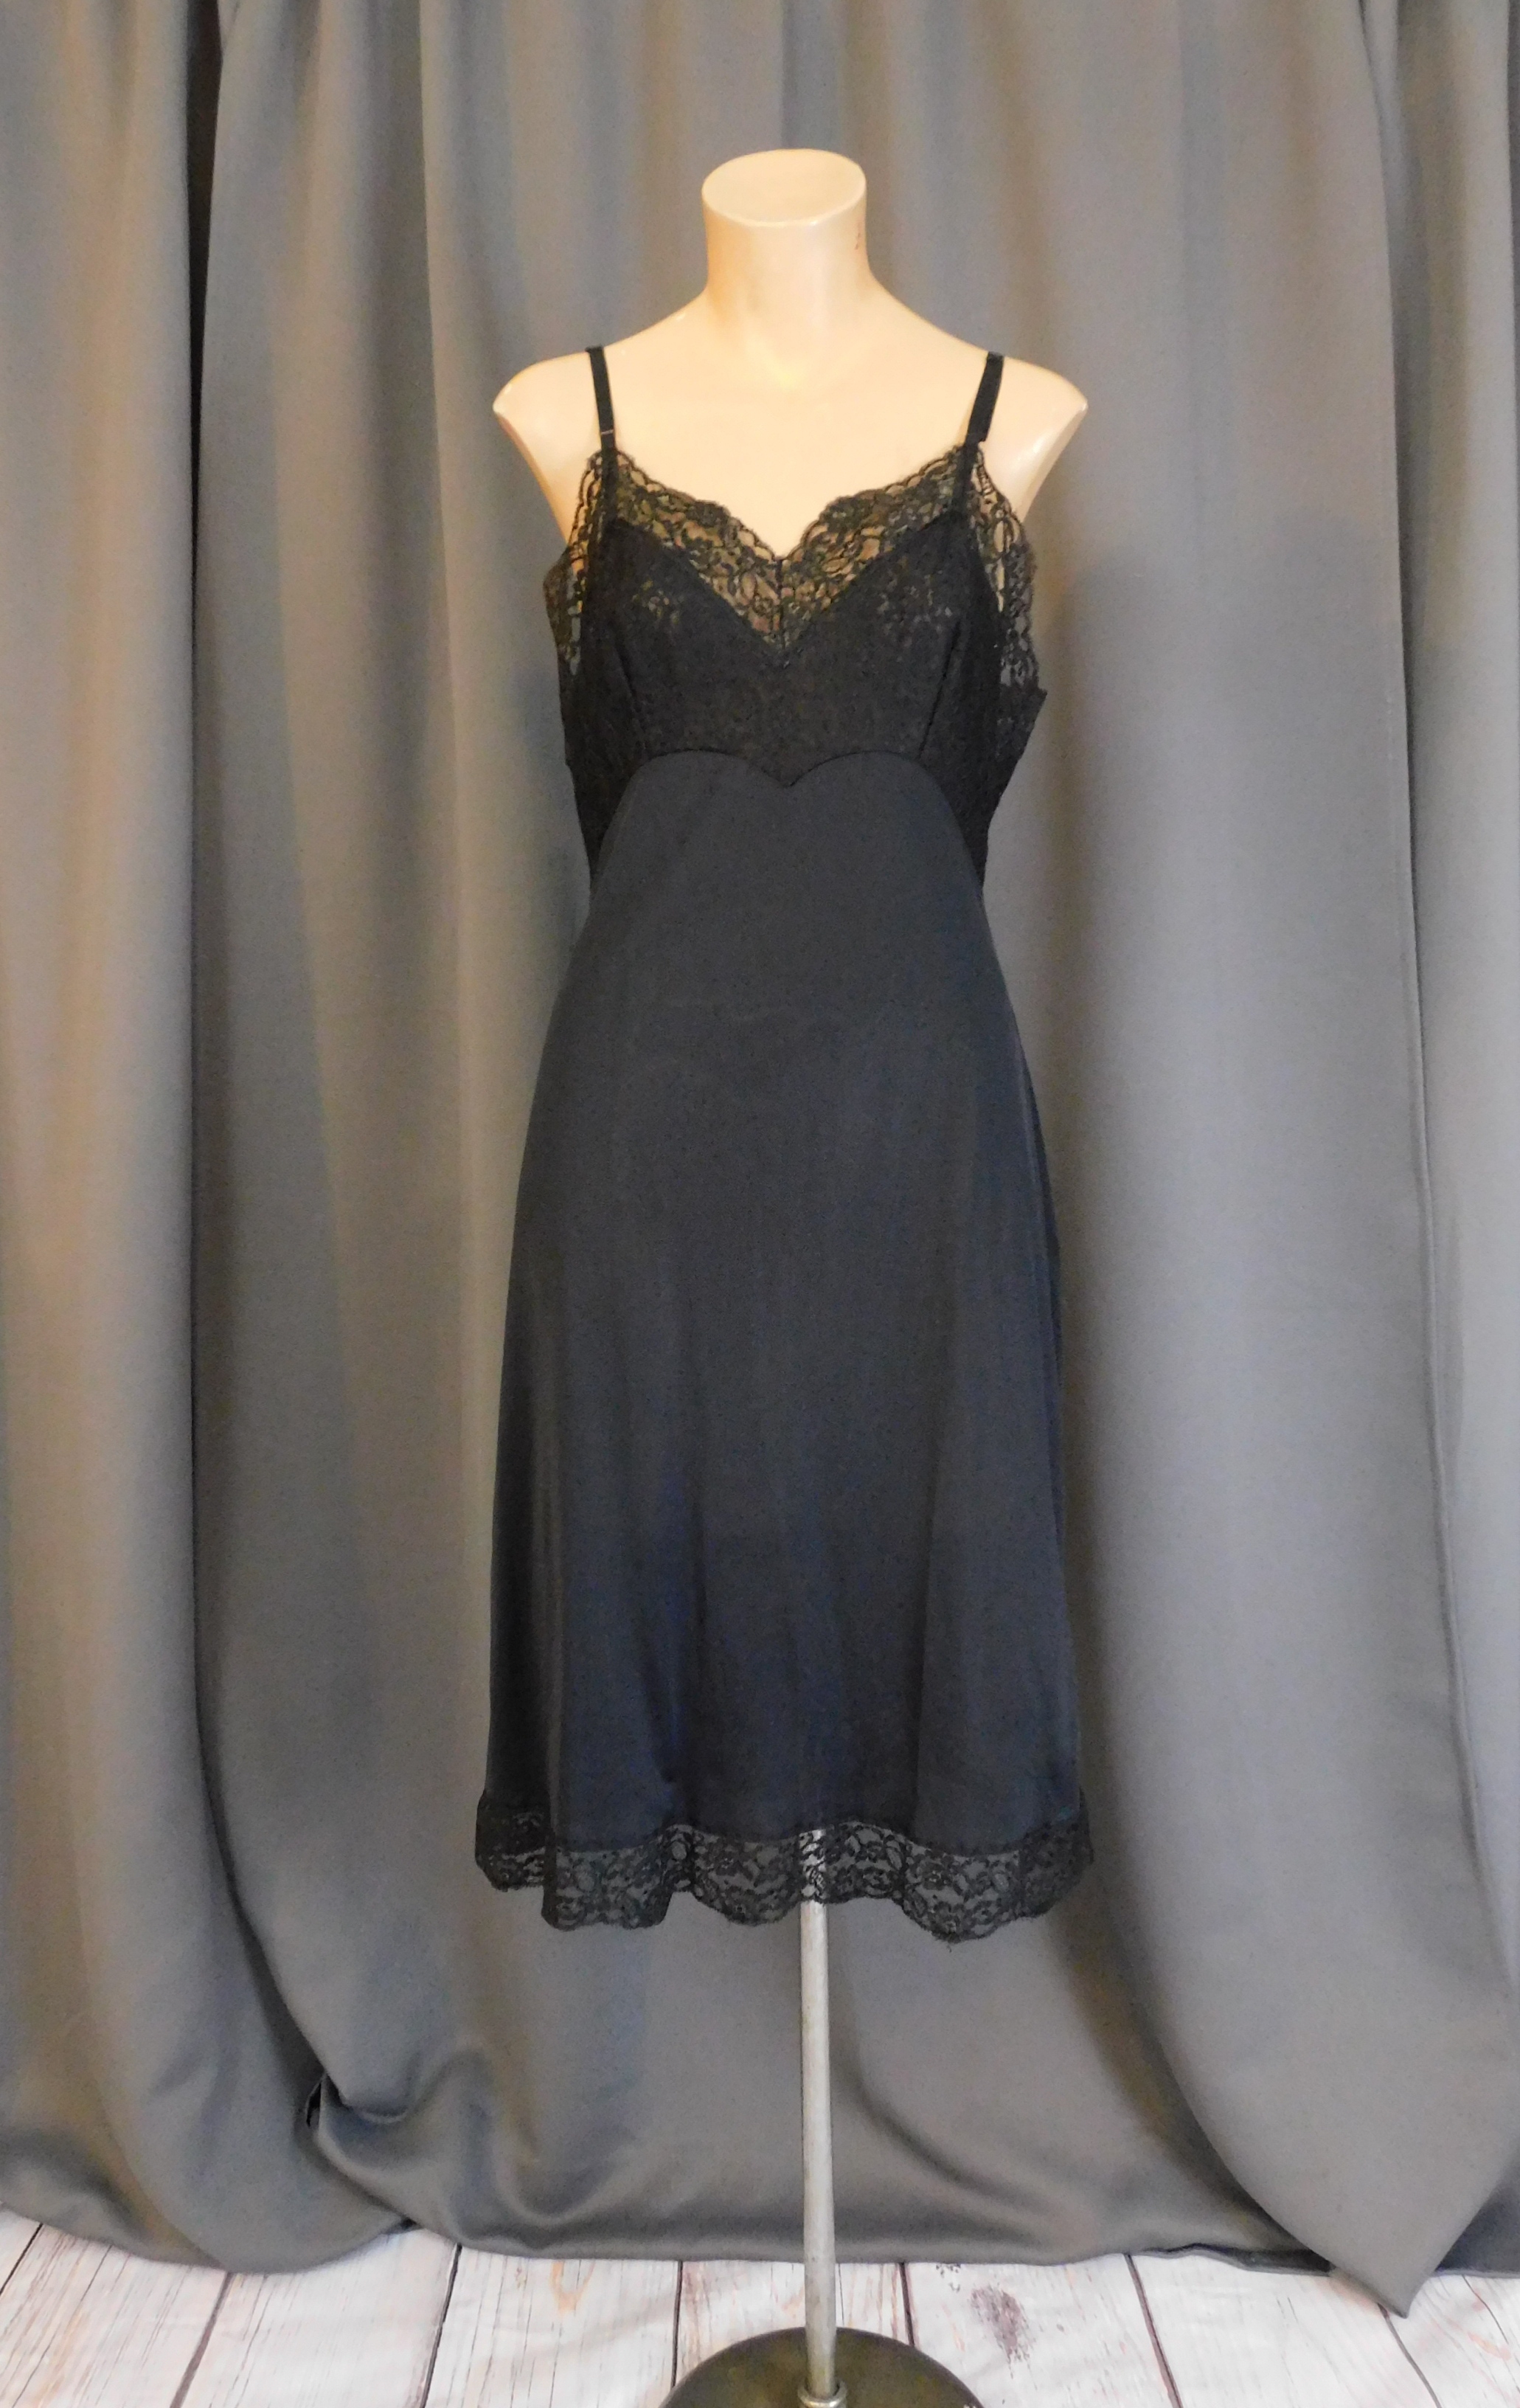 Vintage Black Full Slip with Lace Bodice, Kayser 36 bust 1960s